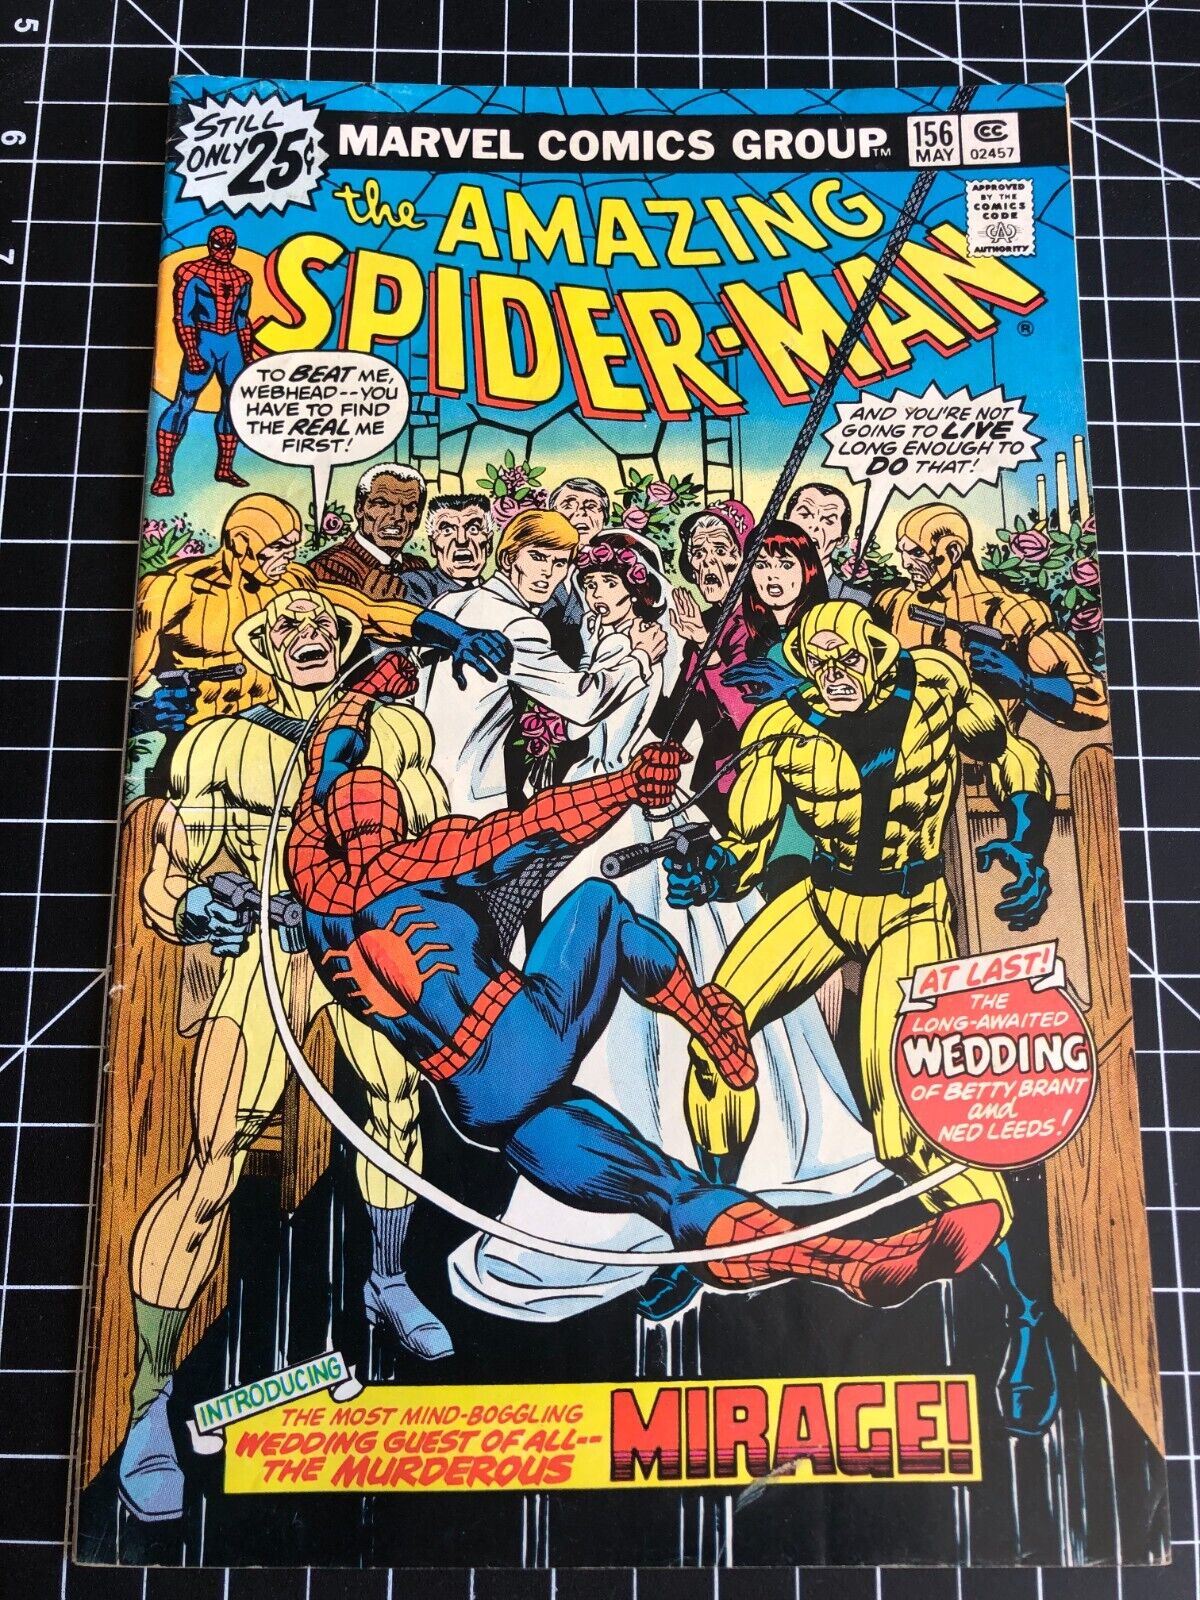 Amazing Spider-man #156 - MVS Included - Marvel 1976 - (VF) - 0x1177